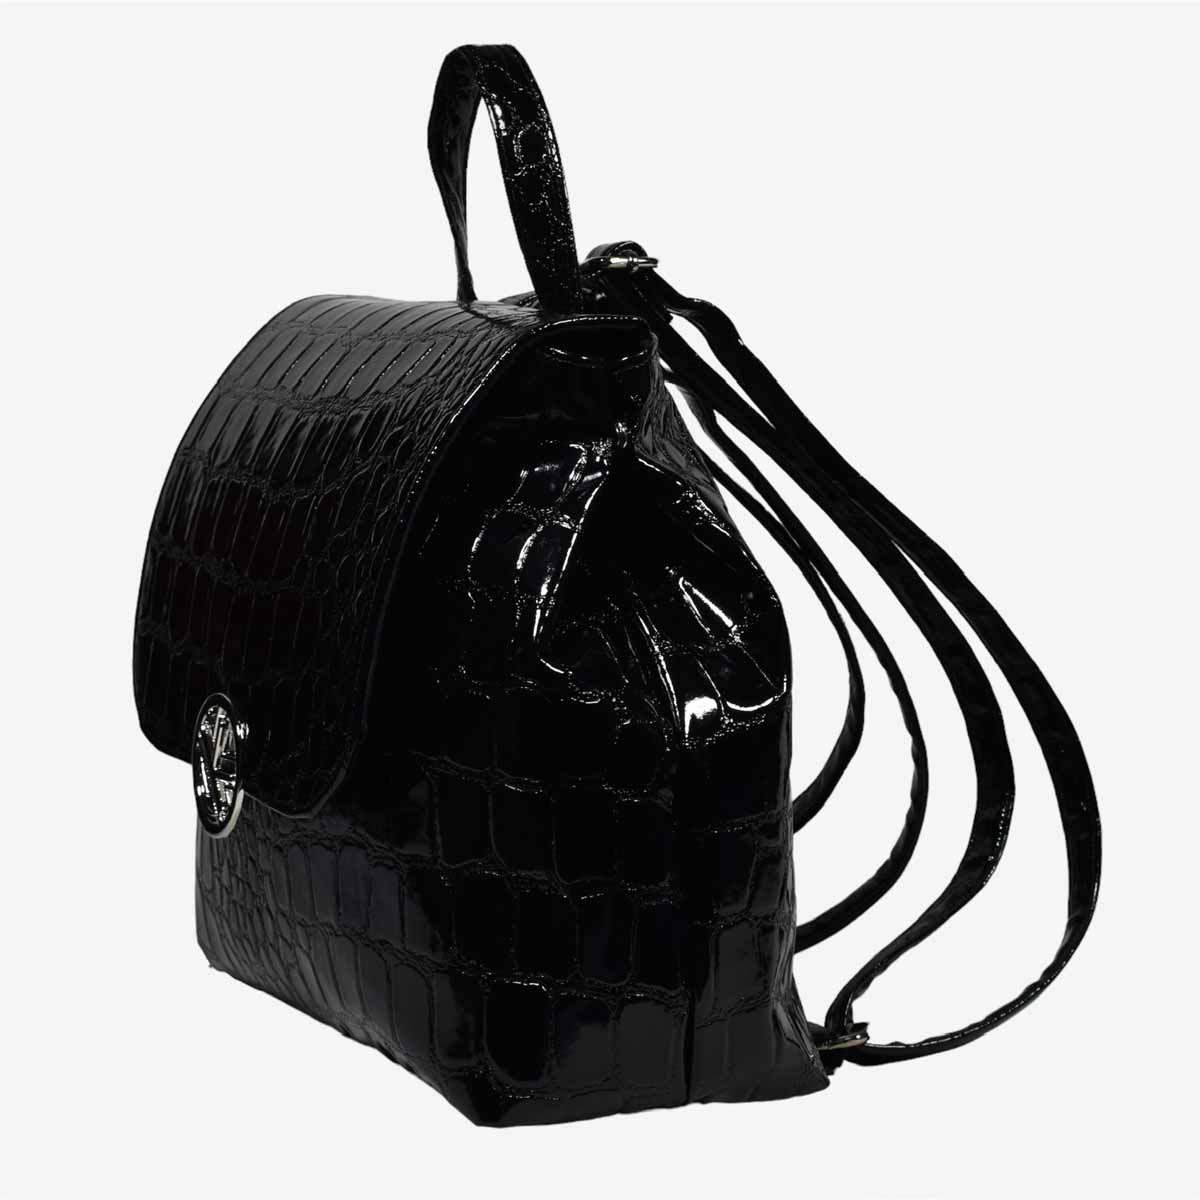 andromeda black croco backpack